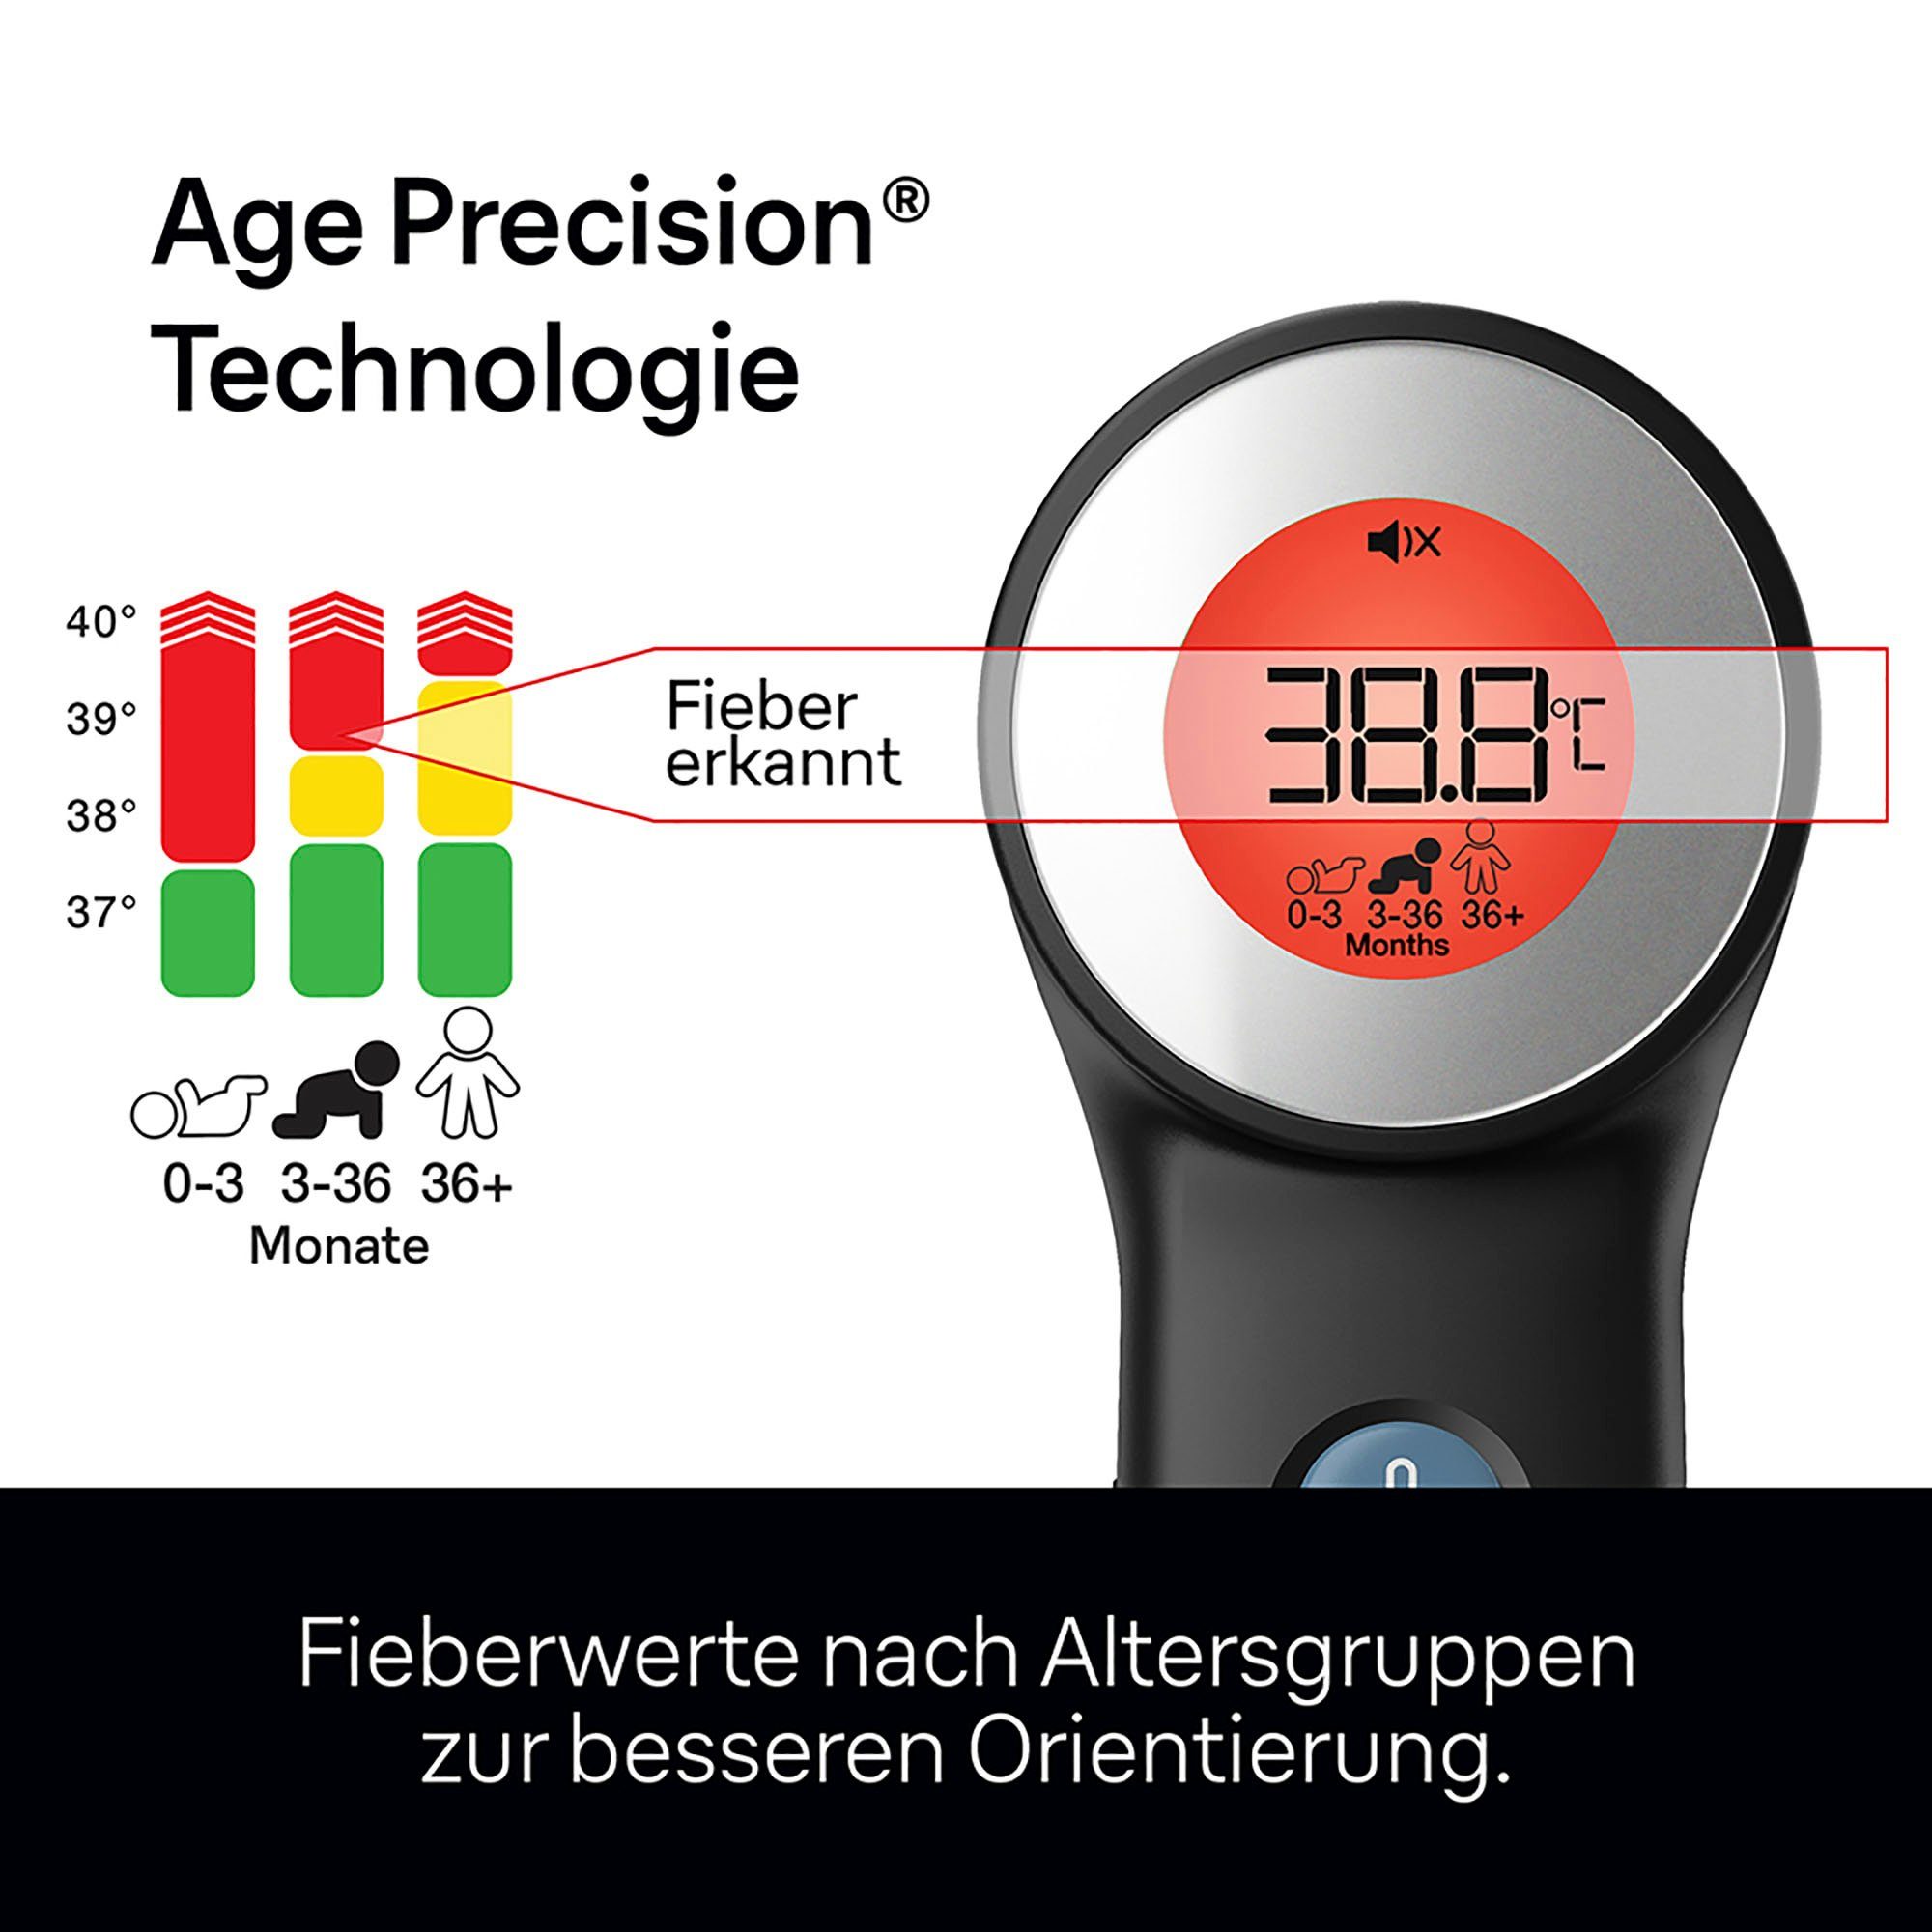 Braun Fieberthermometer SensianTM 7 Precision® Age berührungsloses Technology Stirnthermometer BNT400B, mit